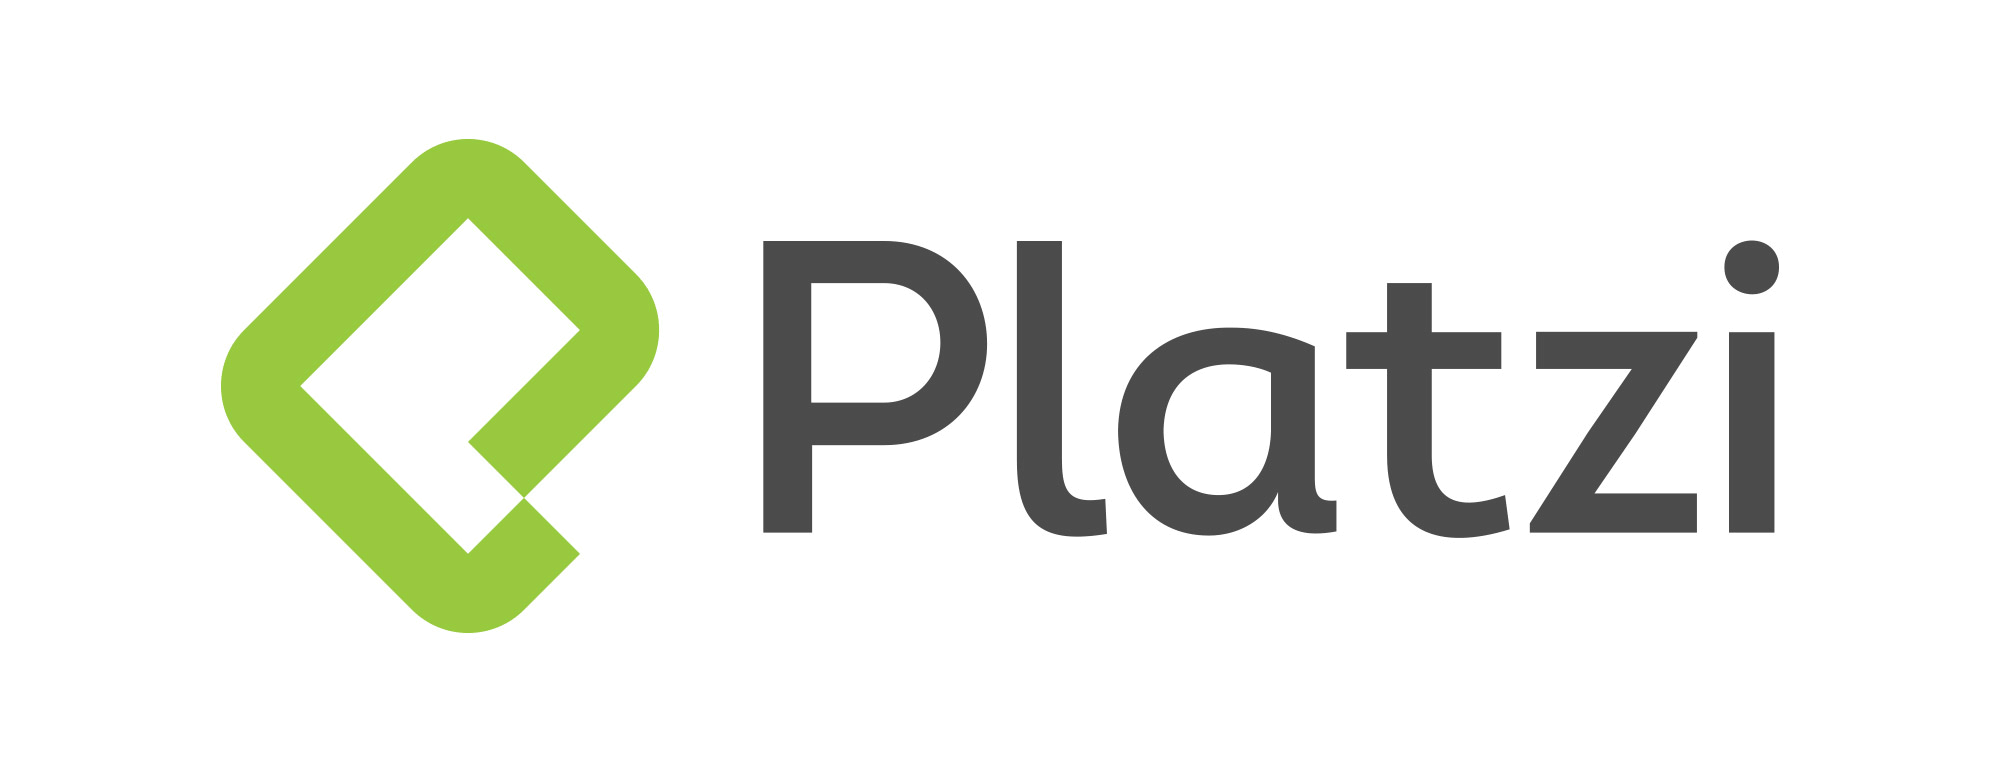 Logo Platzi